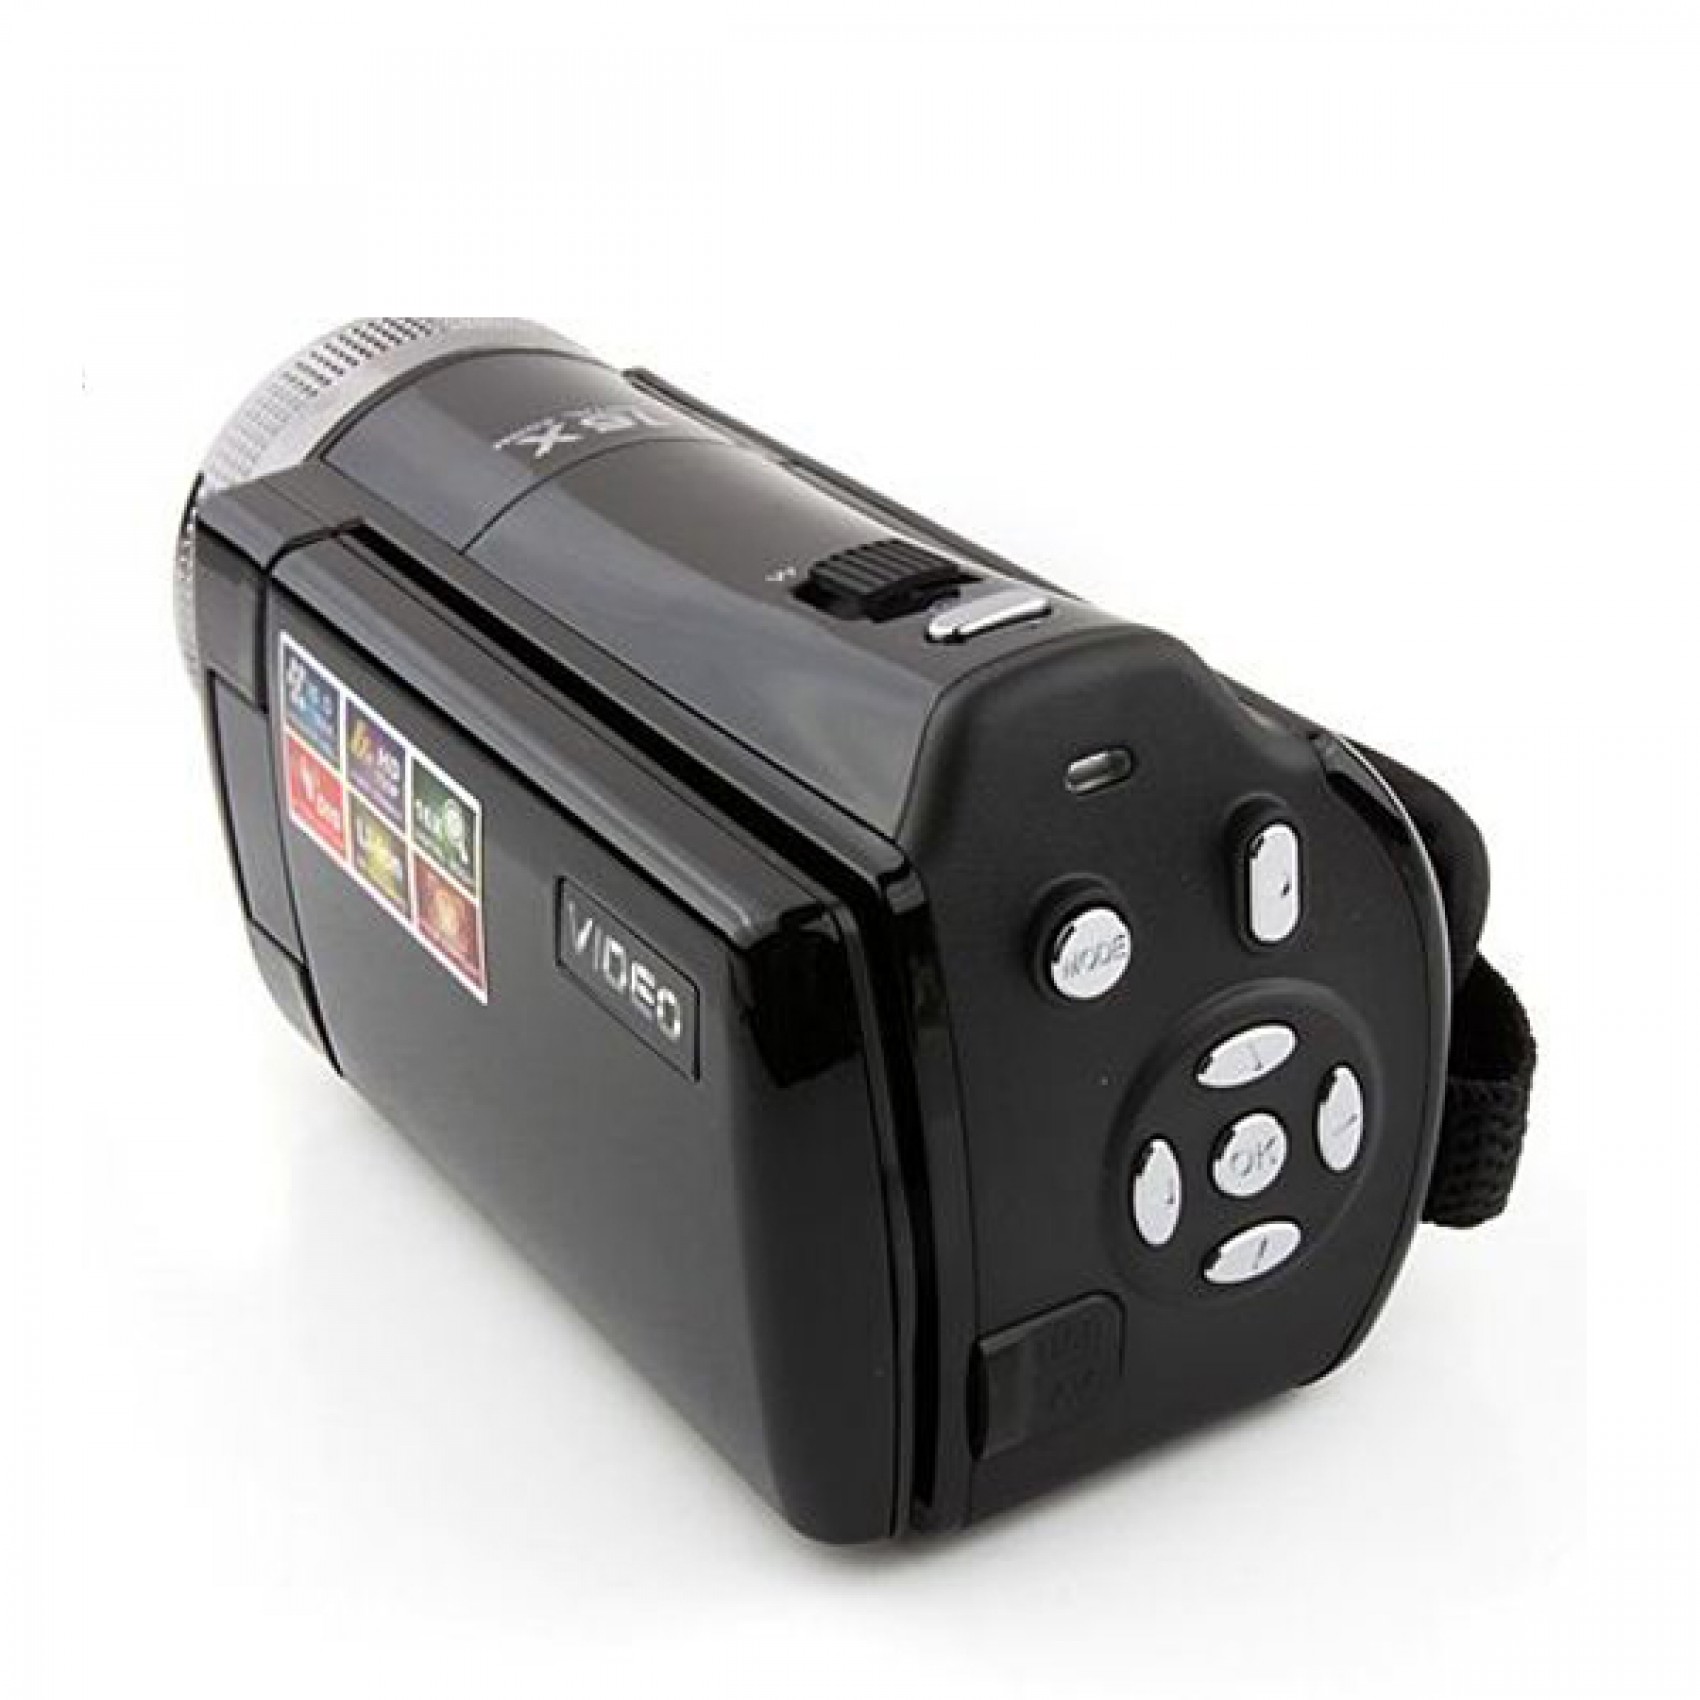 16MP Digital Video Camera Recorder 2.7'' Screen - Black